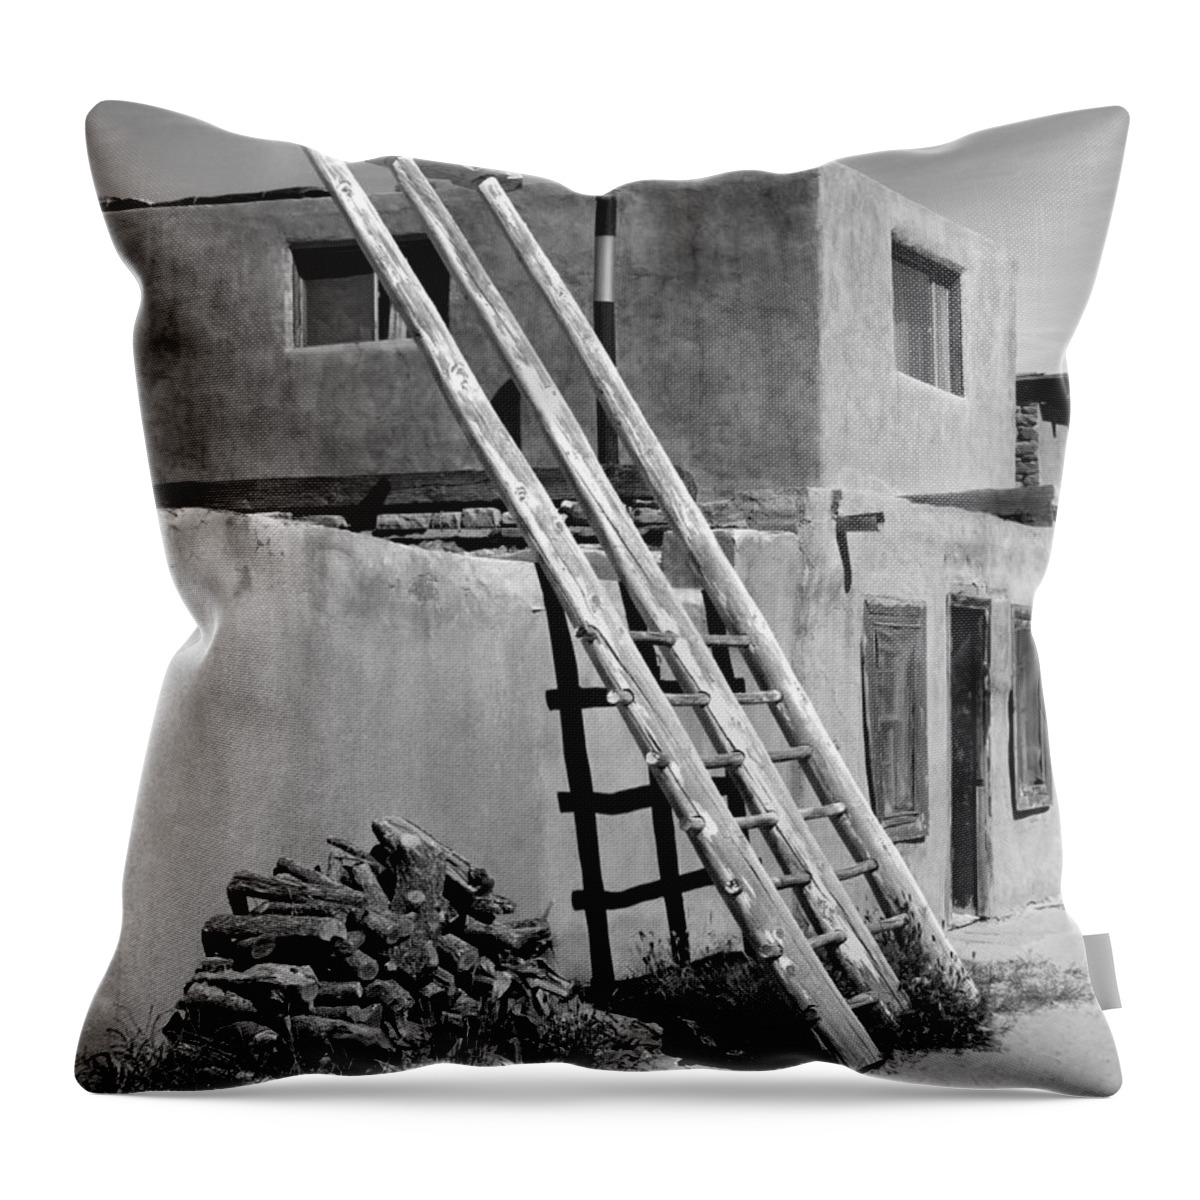 Acoma Pueblo Throw Pillow featuring the photograph Acoma Pueblo Adobe Homes by Mike McGlothlen